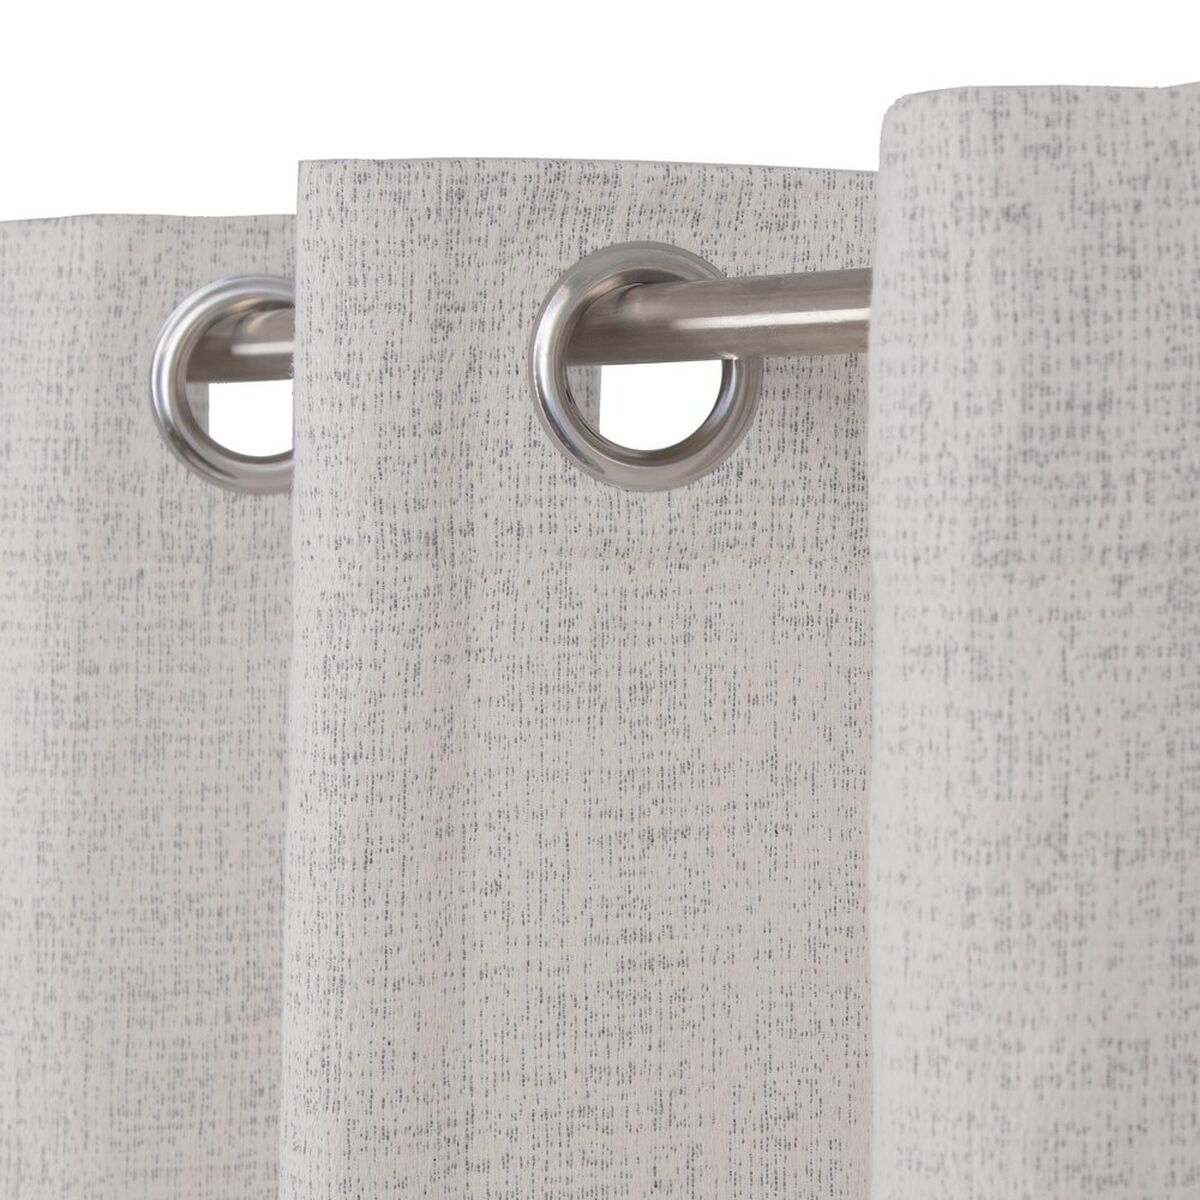 Curtain Beige Polyester Silver 100% cotton 140 x 260 cm